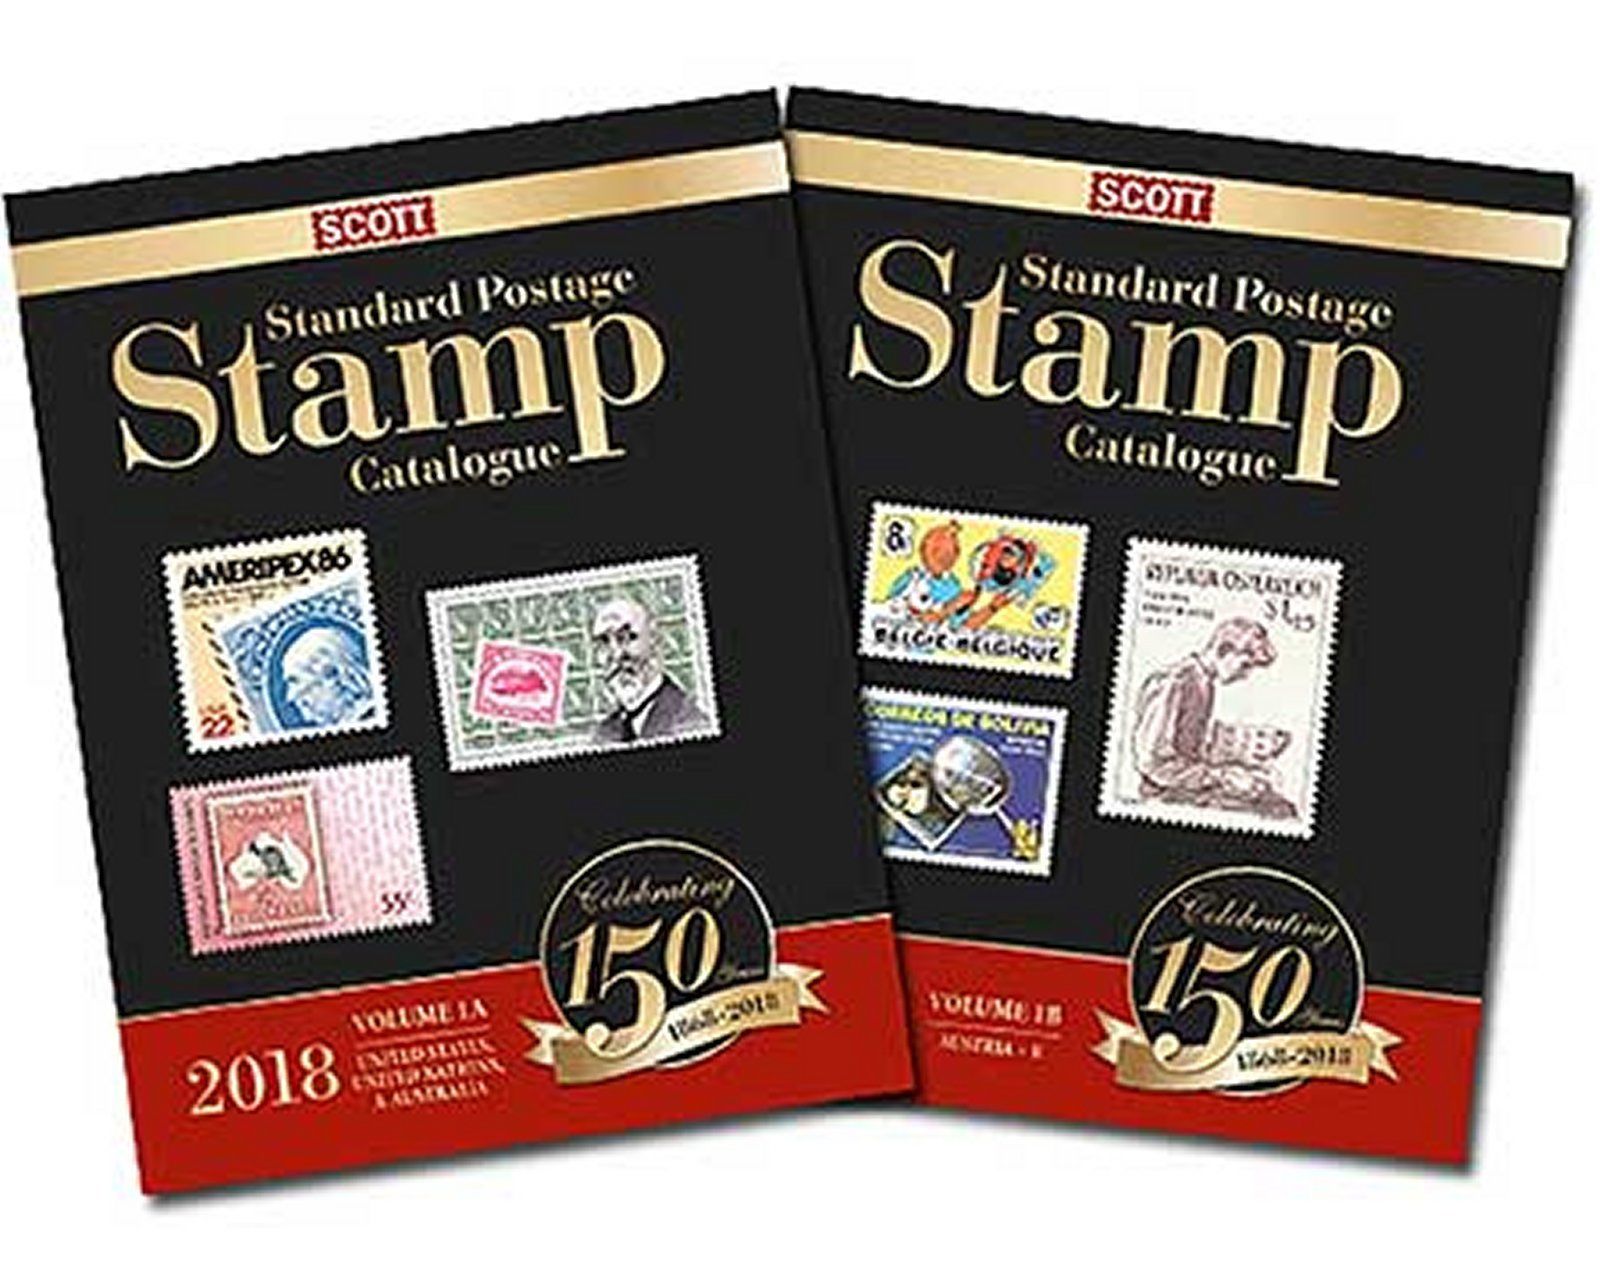 Scott Stamp Catalog 2018 Volume 1A & 1B - COUNTRIES A-B